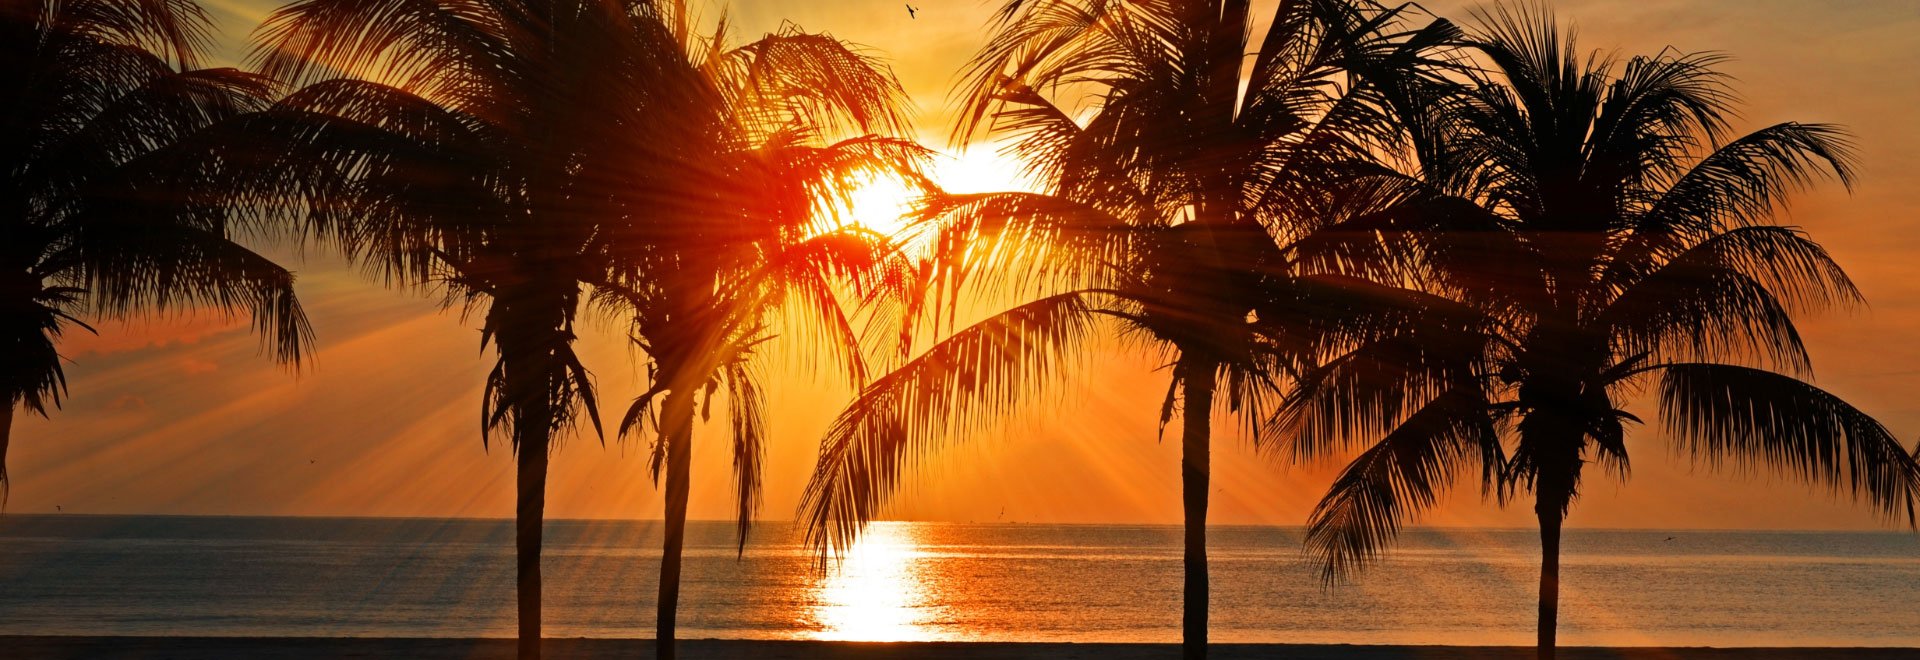 setting sun over ocean between palm trees